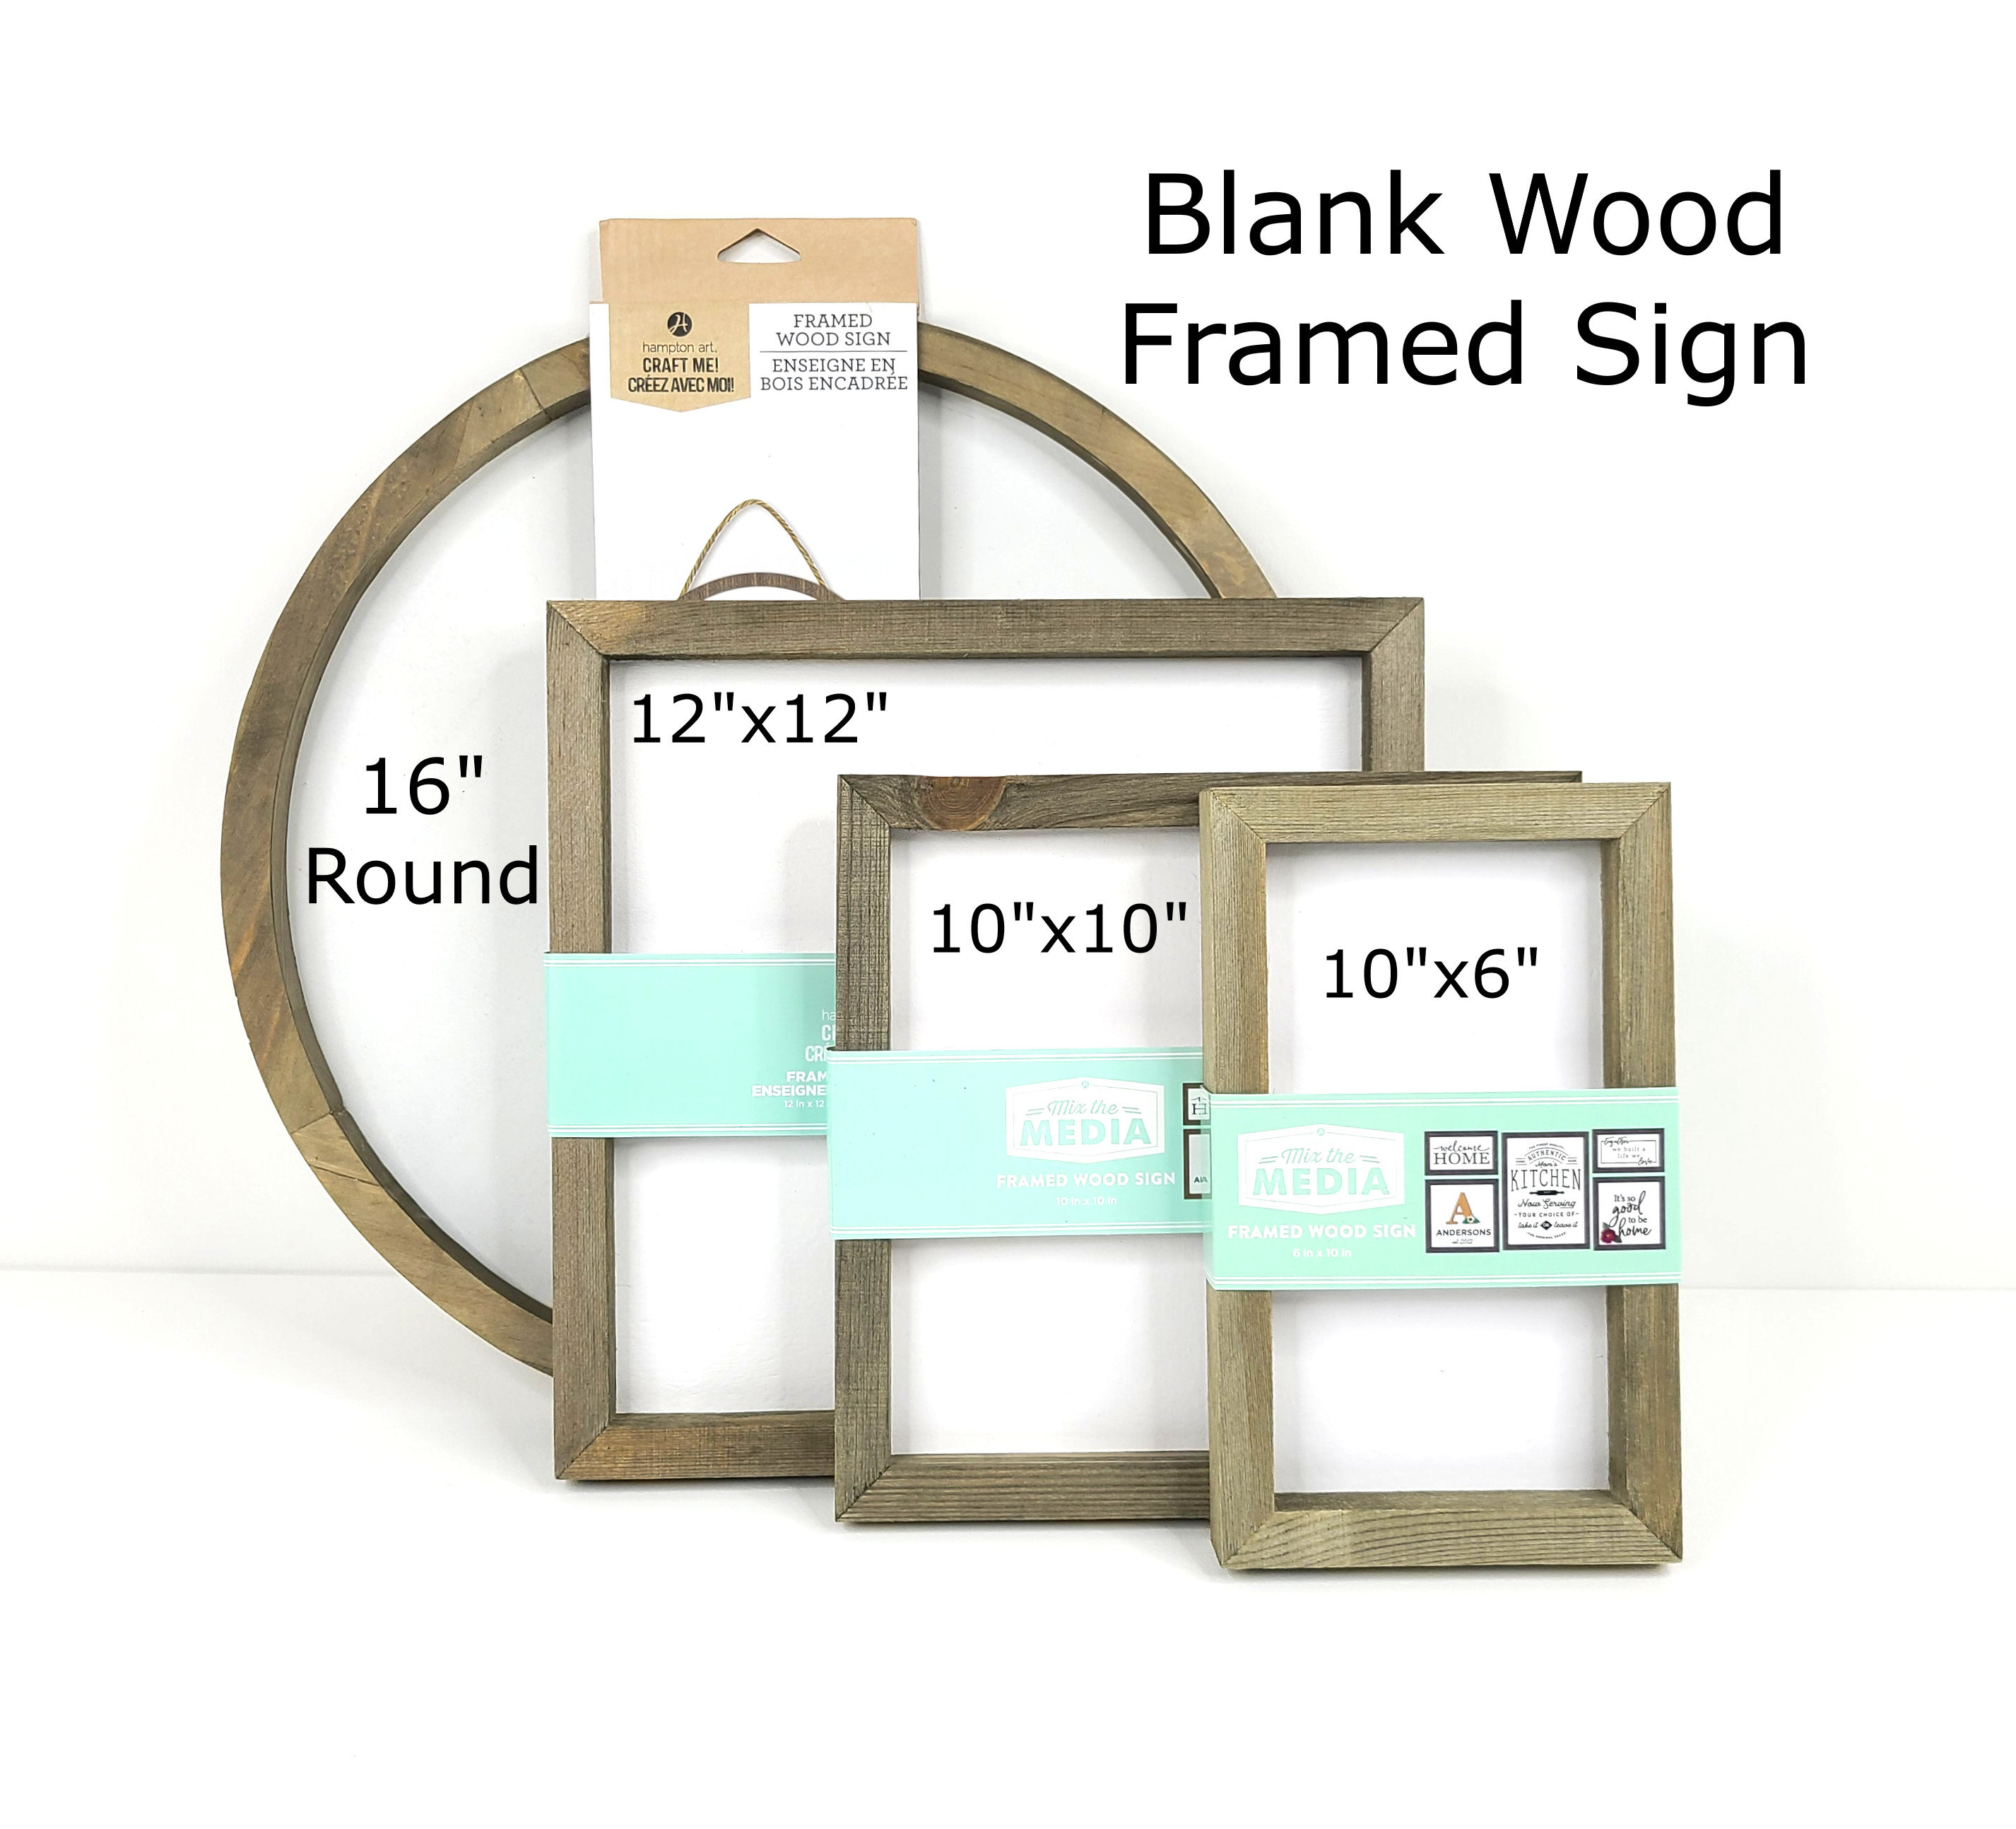 ArtSkills Project Craft Hanging Whitewashed Blank Wood Plank